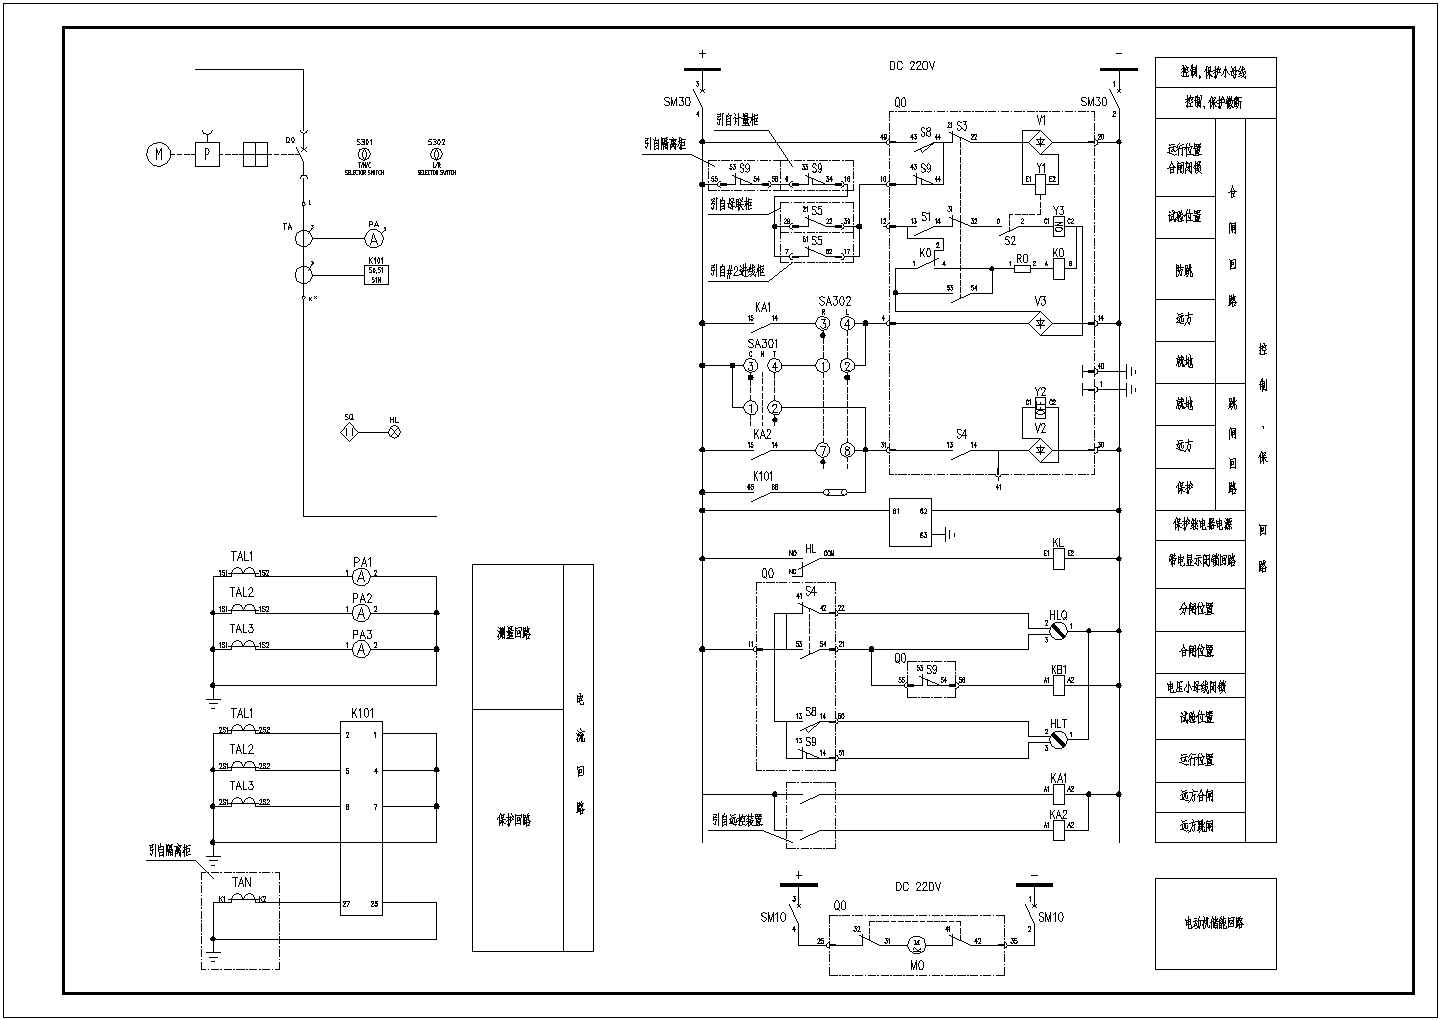 SPAJ140C-北京地区电气设计方案全套CAD图